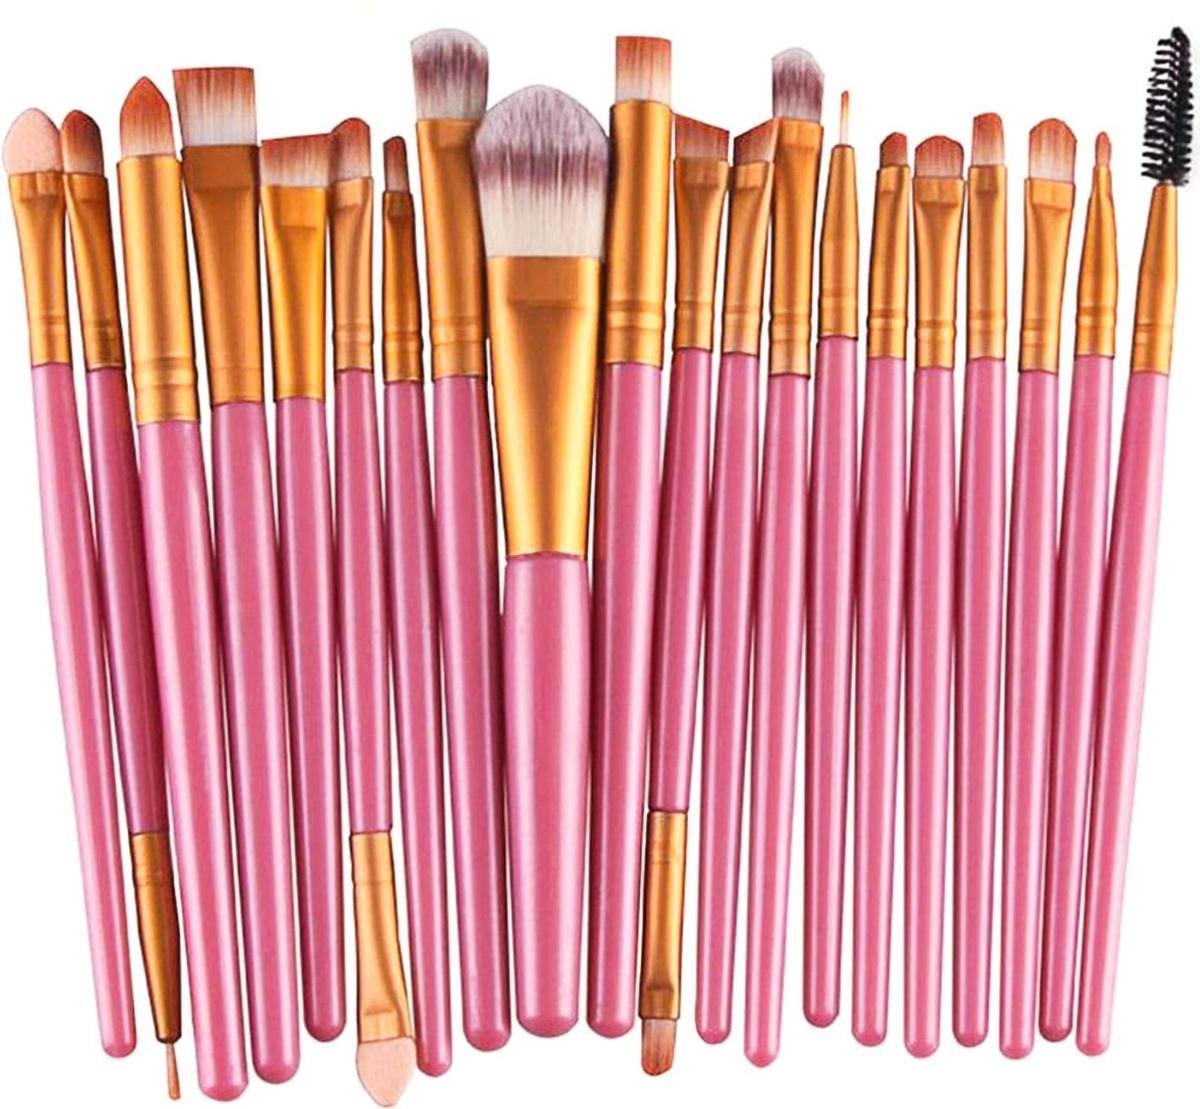 Makeup kwastenset - Makeup set - 20delig - Roze - Goud - Able & Borret